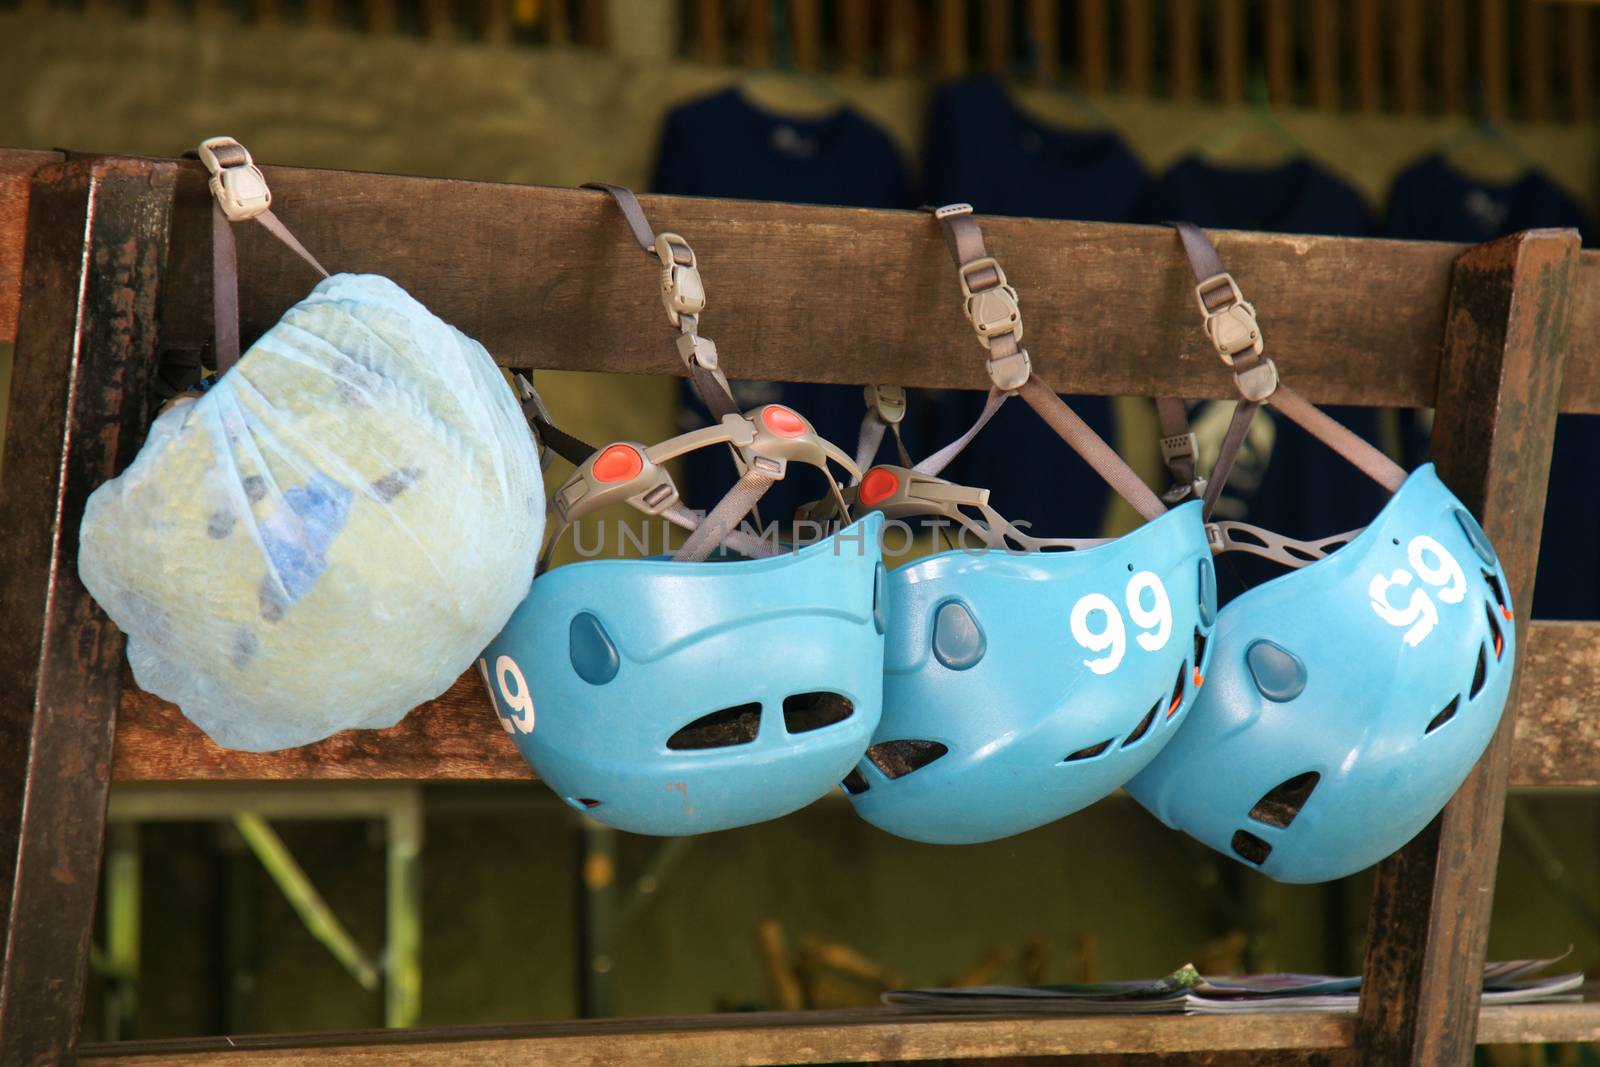 Group of safety helmets for zipline jungle adventure extreme spo by mranucha